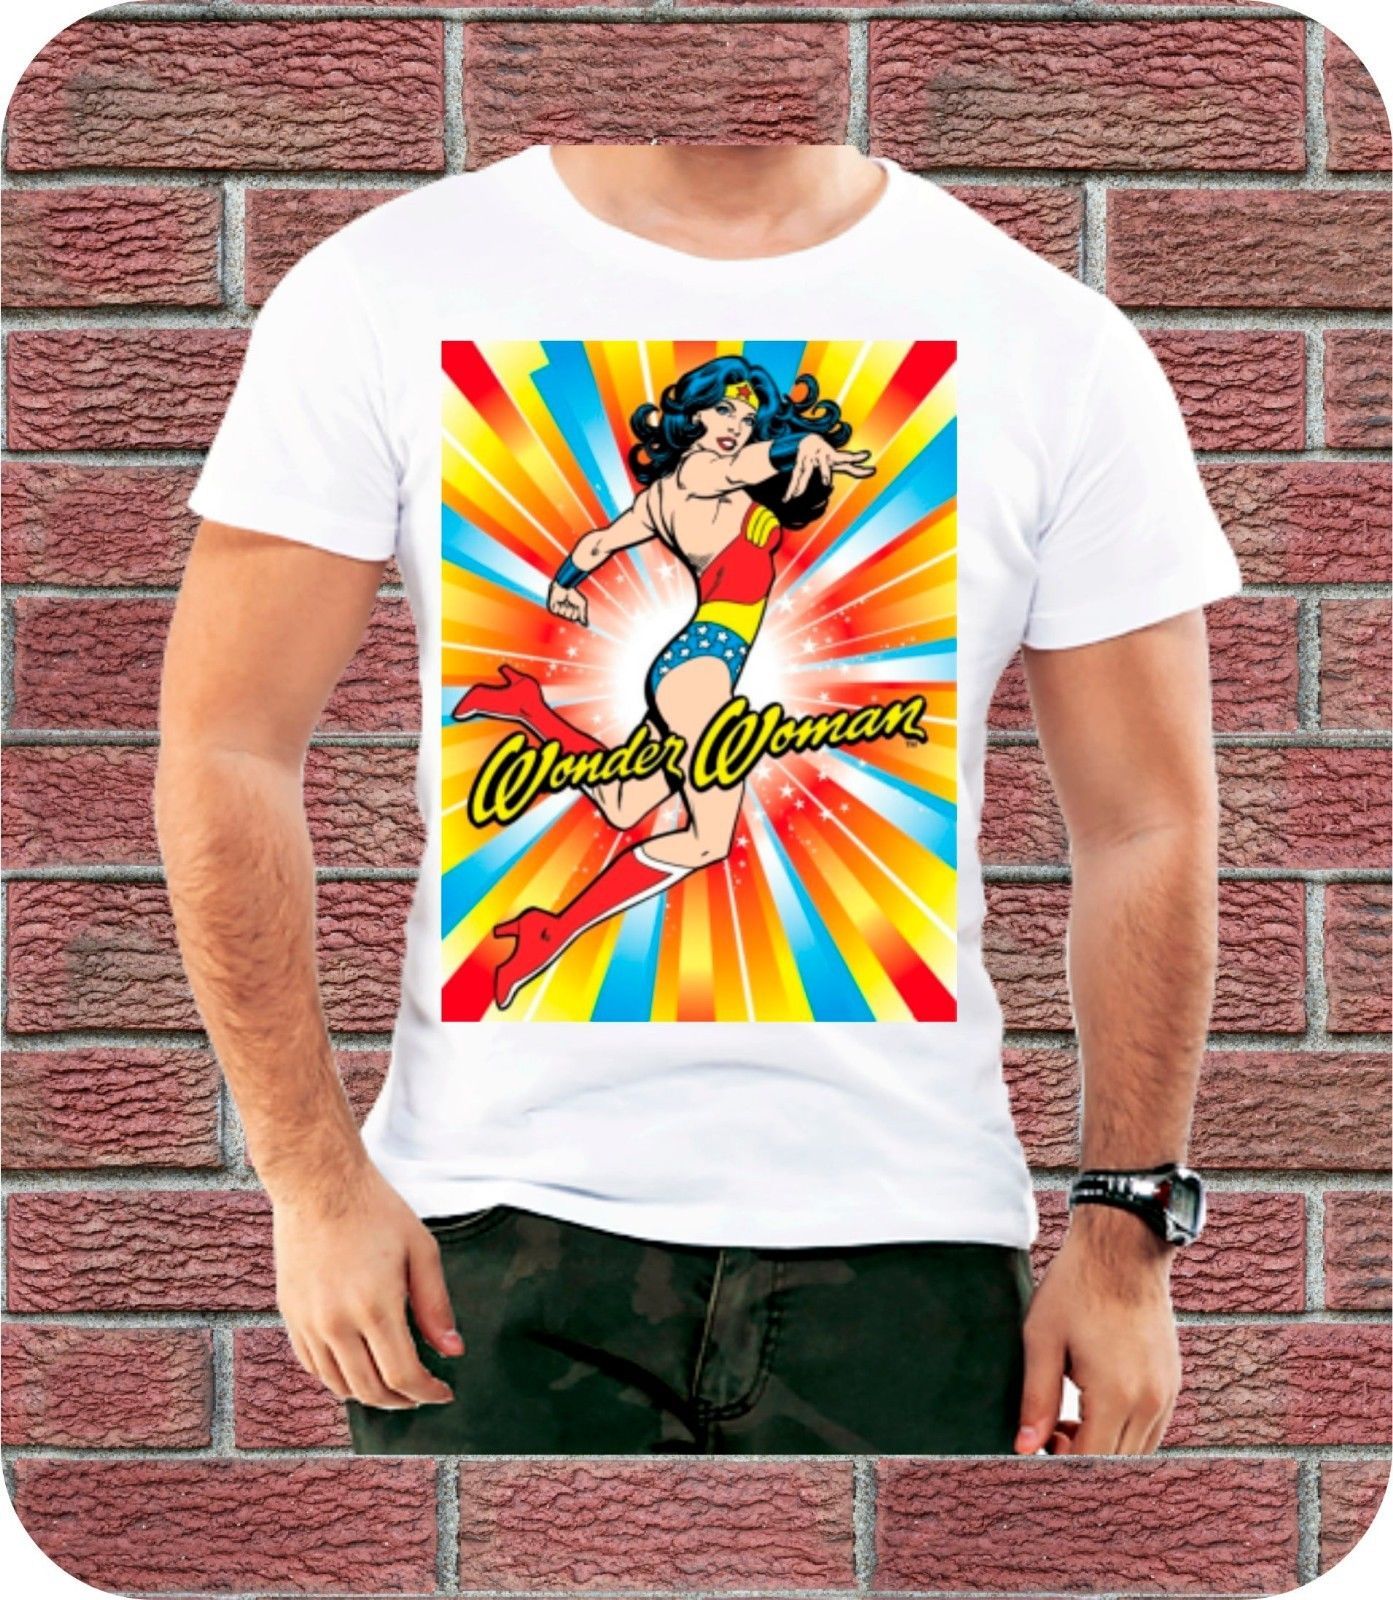 Wonder Woman ic Book Movie Men T Shirt Birthday Christmas Present Xmas Gift Cool Casual Pride T Shirt Men Uni New Fashion T Shirt A Day Retro Tee